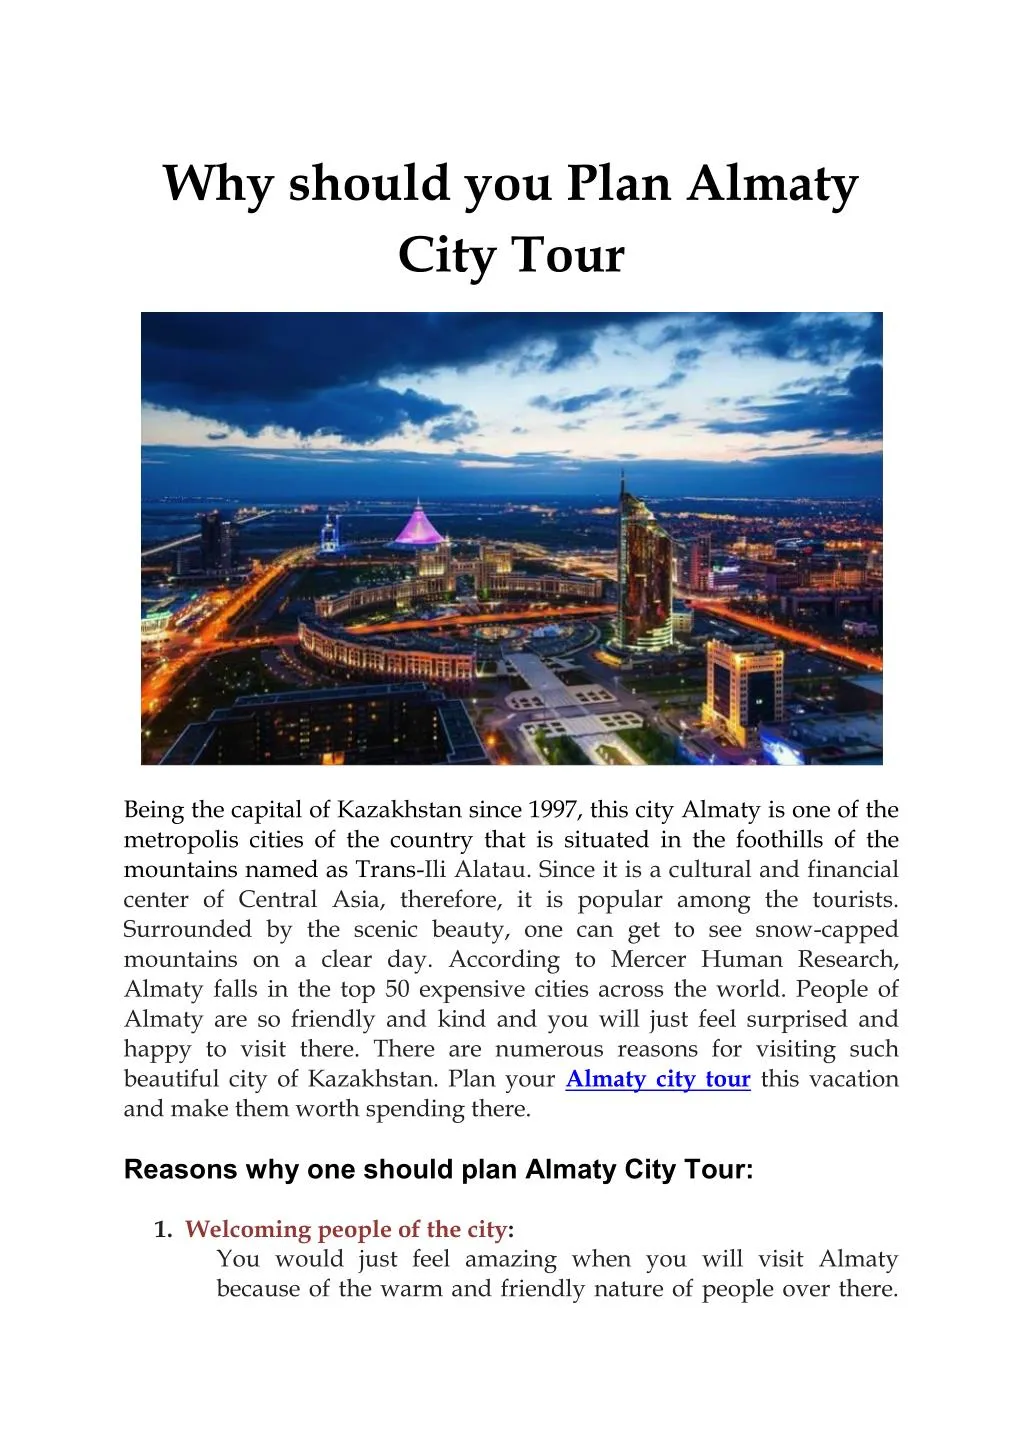 why should you plan almaty city tour